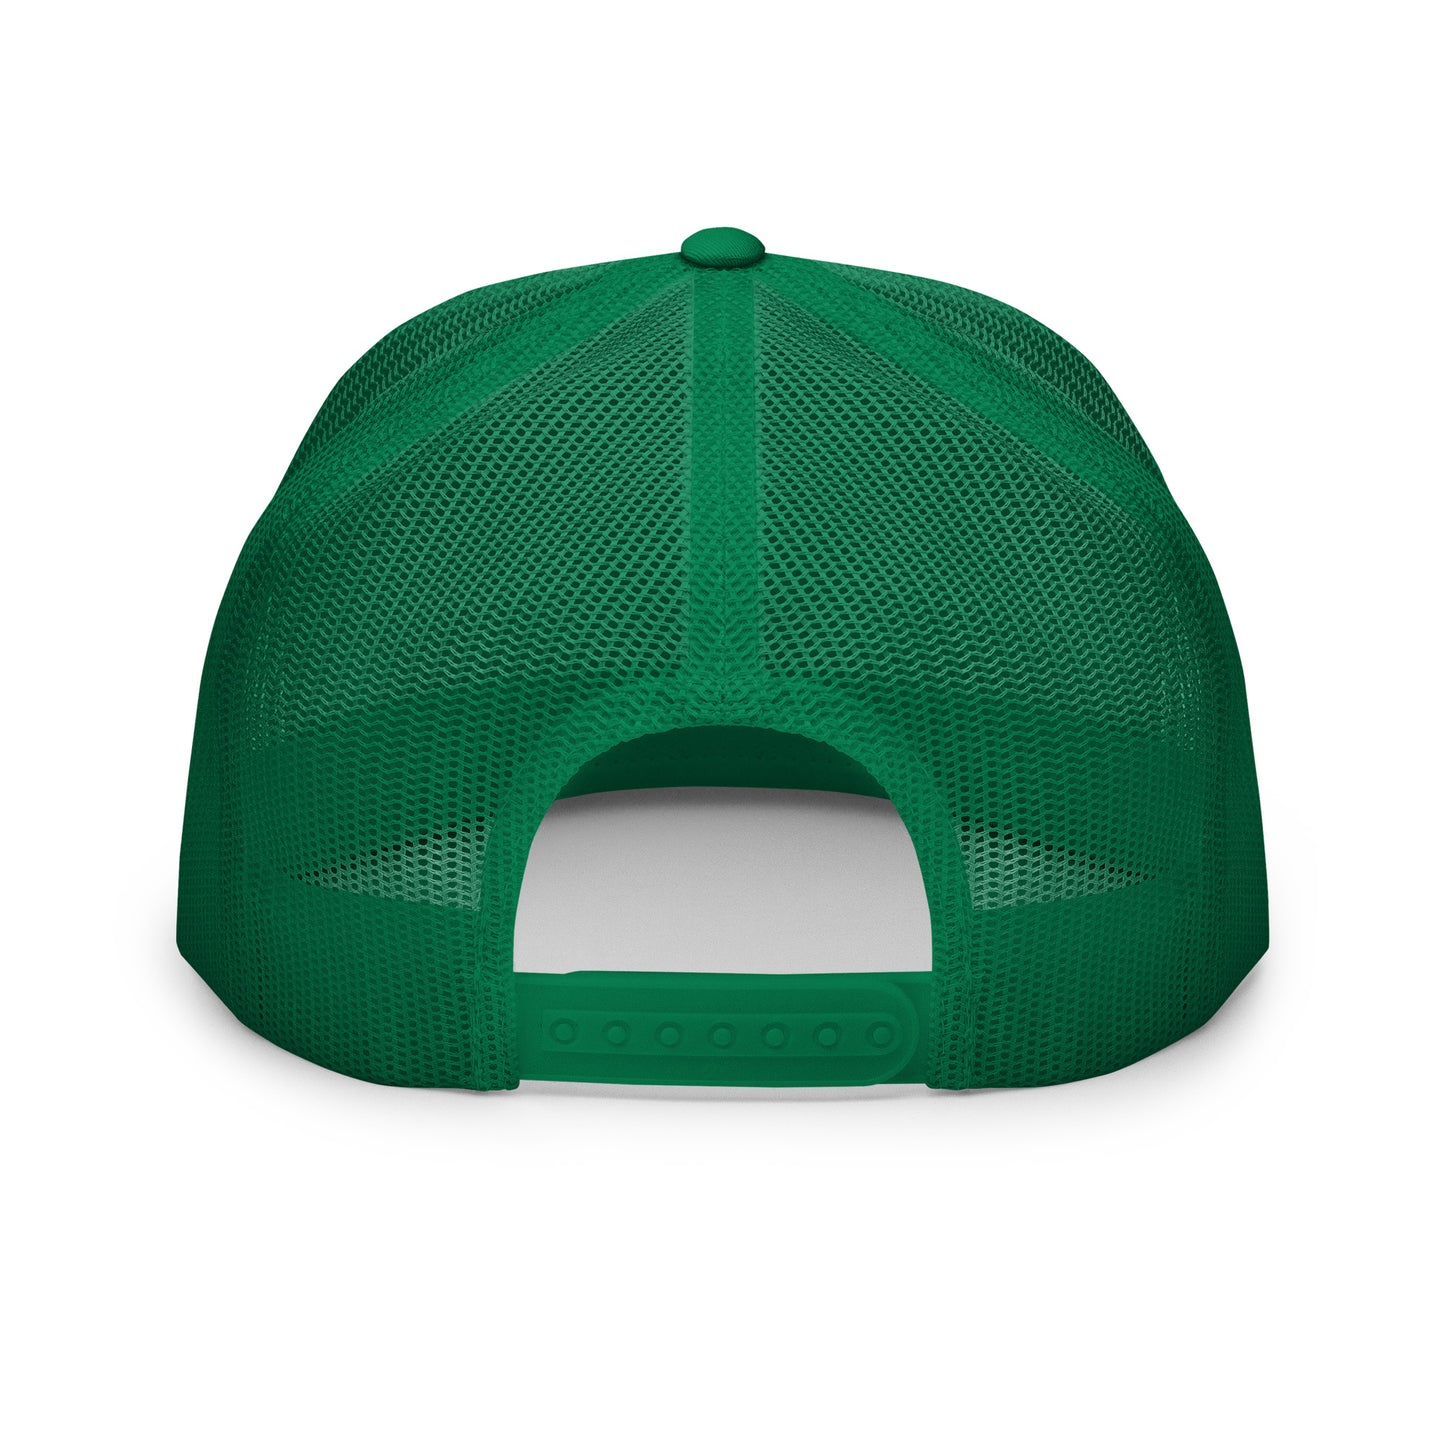 GB Green Bay Nation Trucker Hat